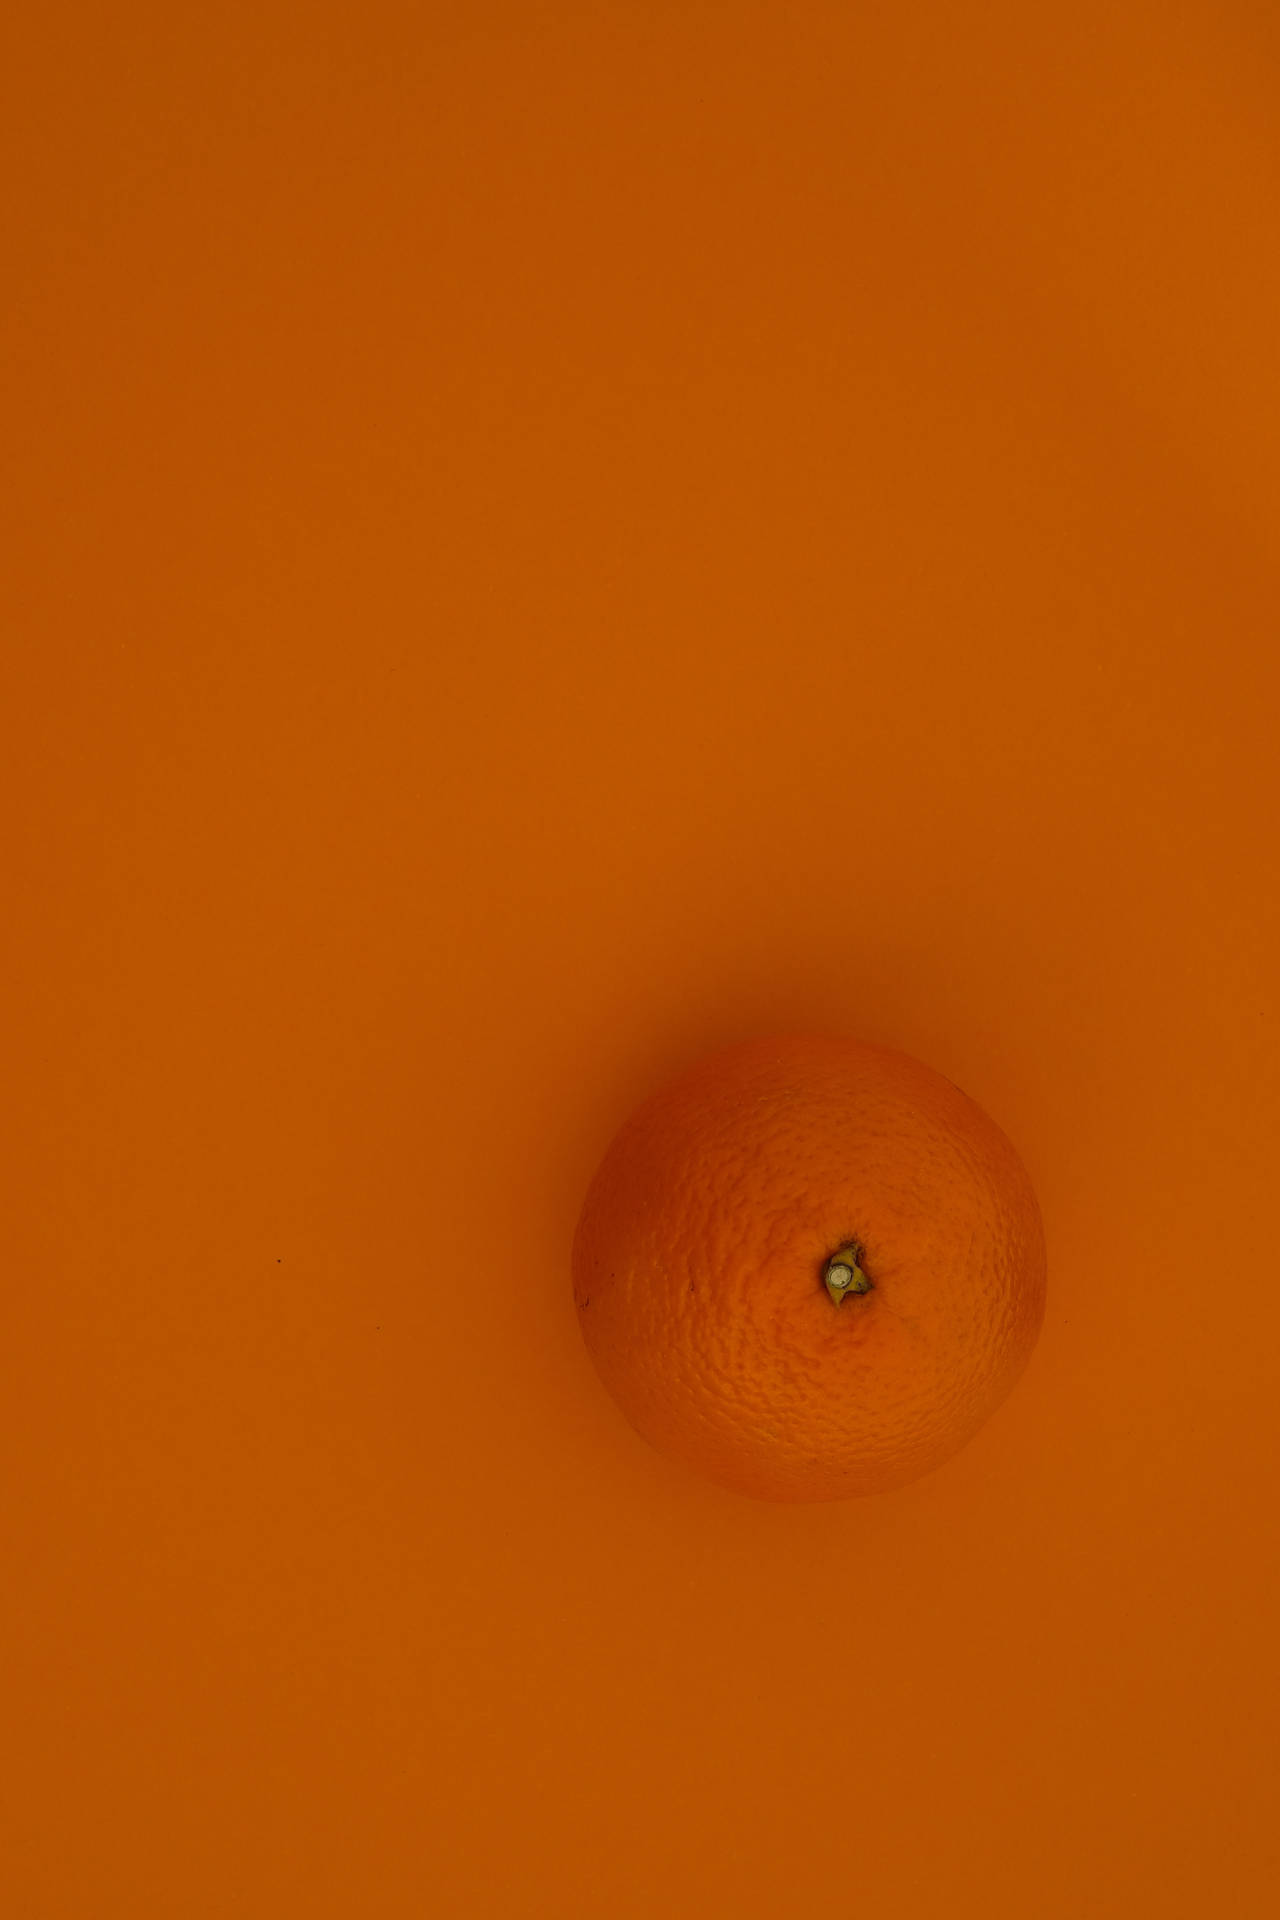 Orange 3667X5500 Wallpaper and Background Image